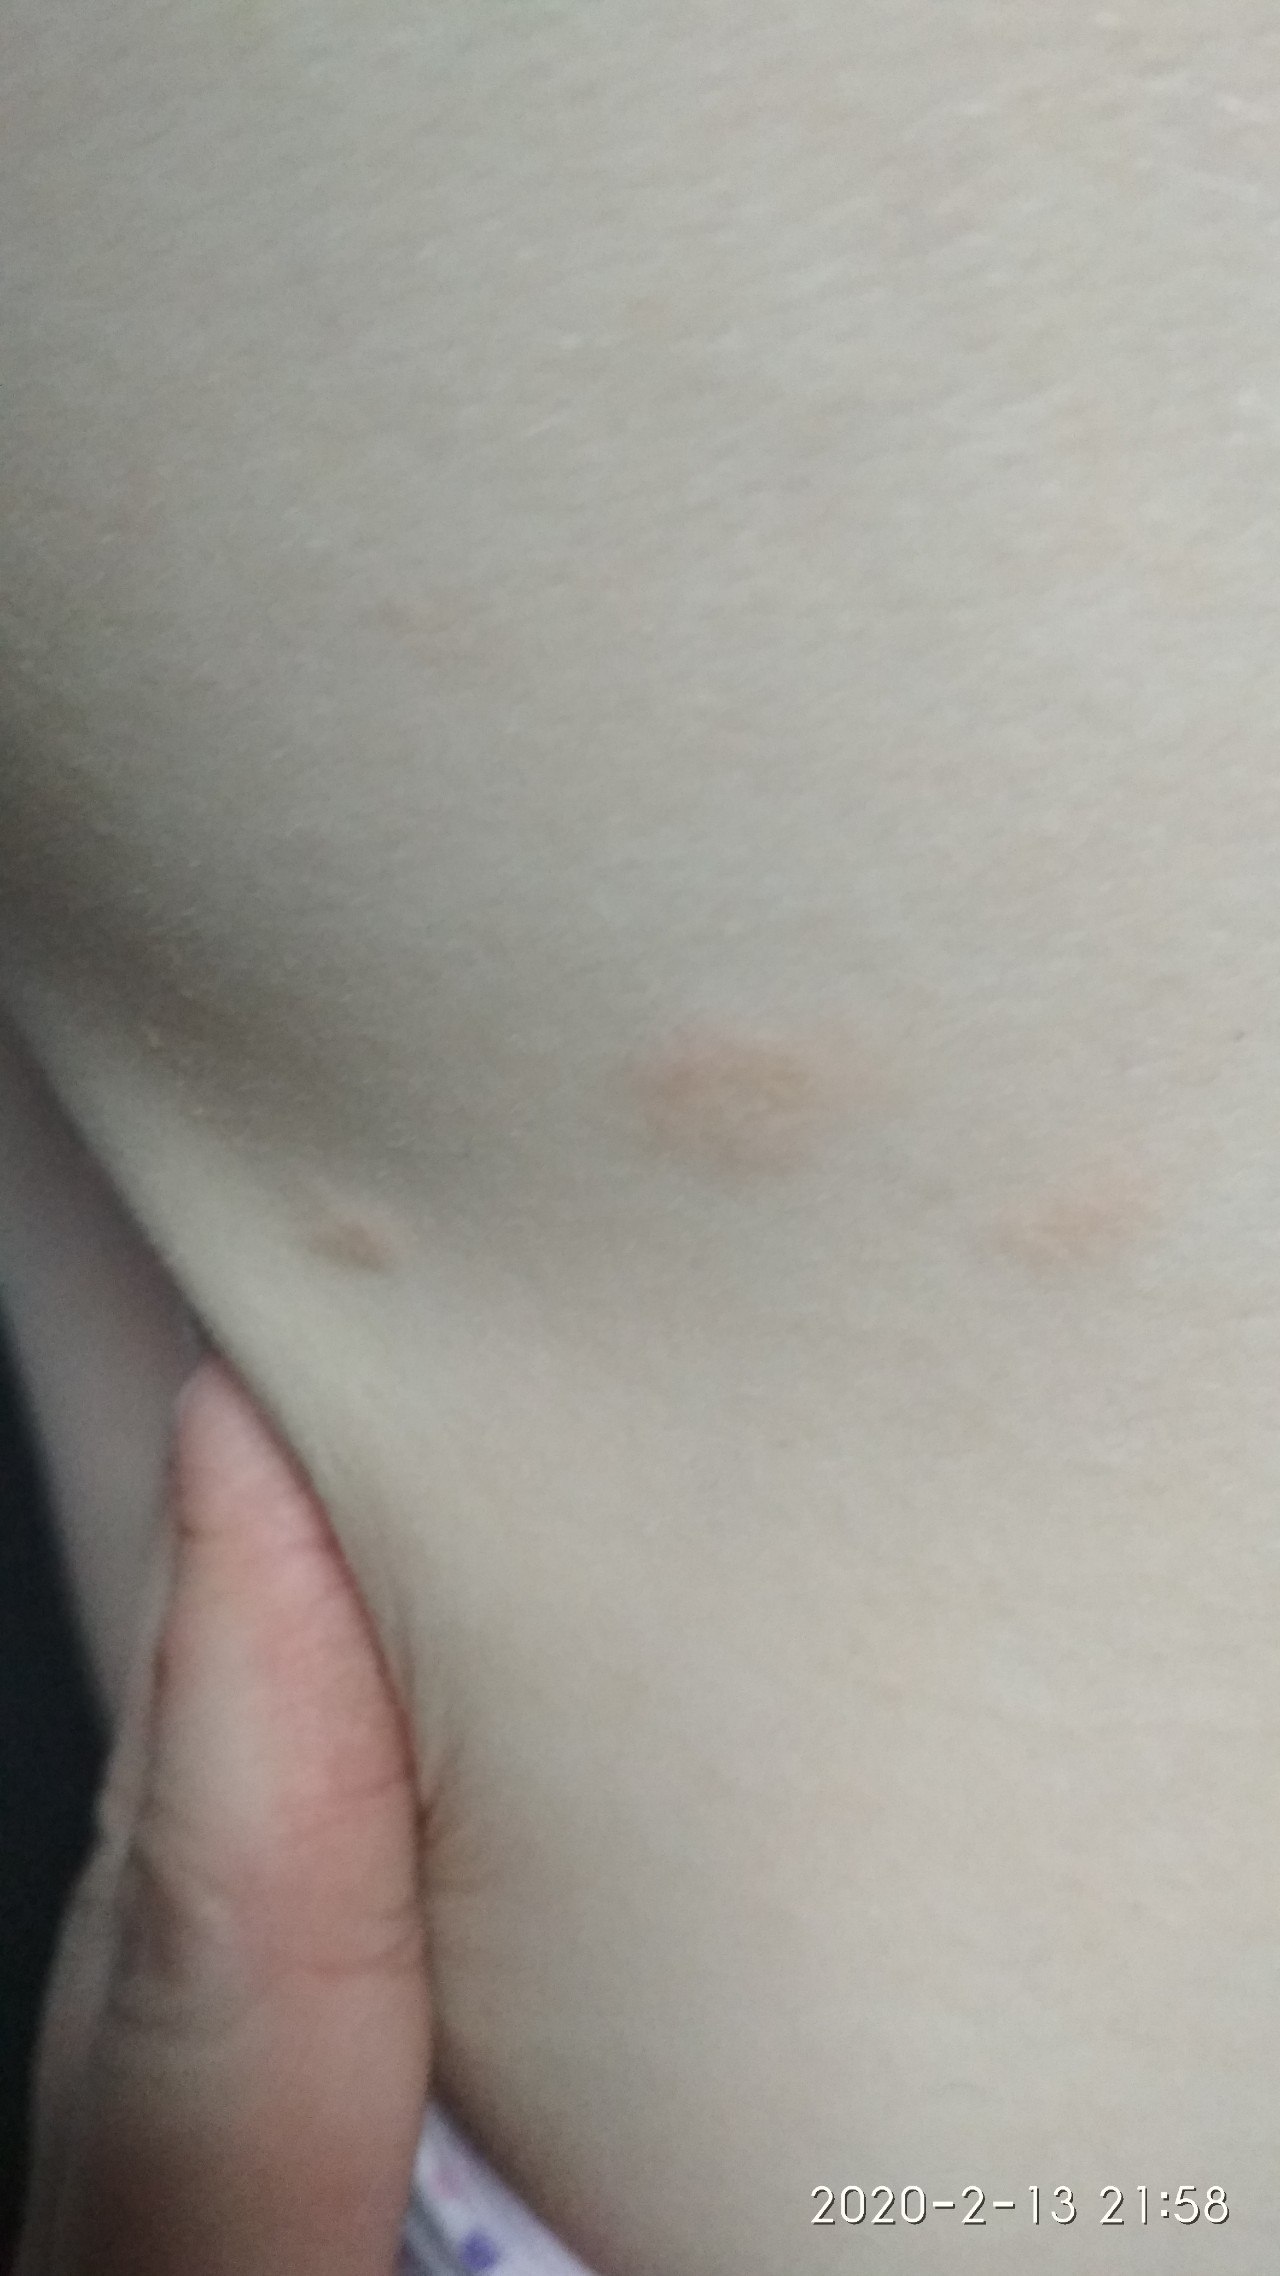 светло коричневые пятна на груди у женщин фото 112